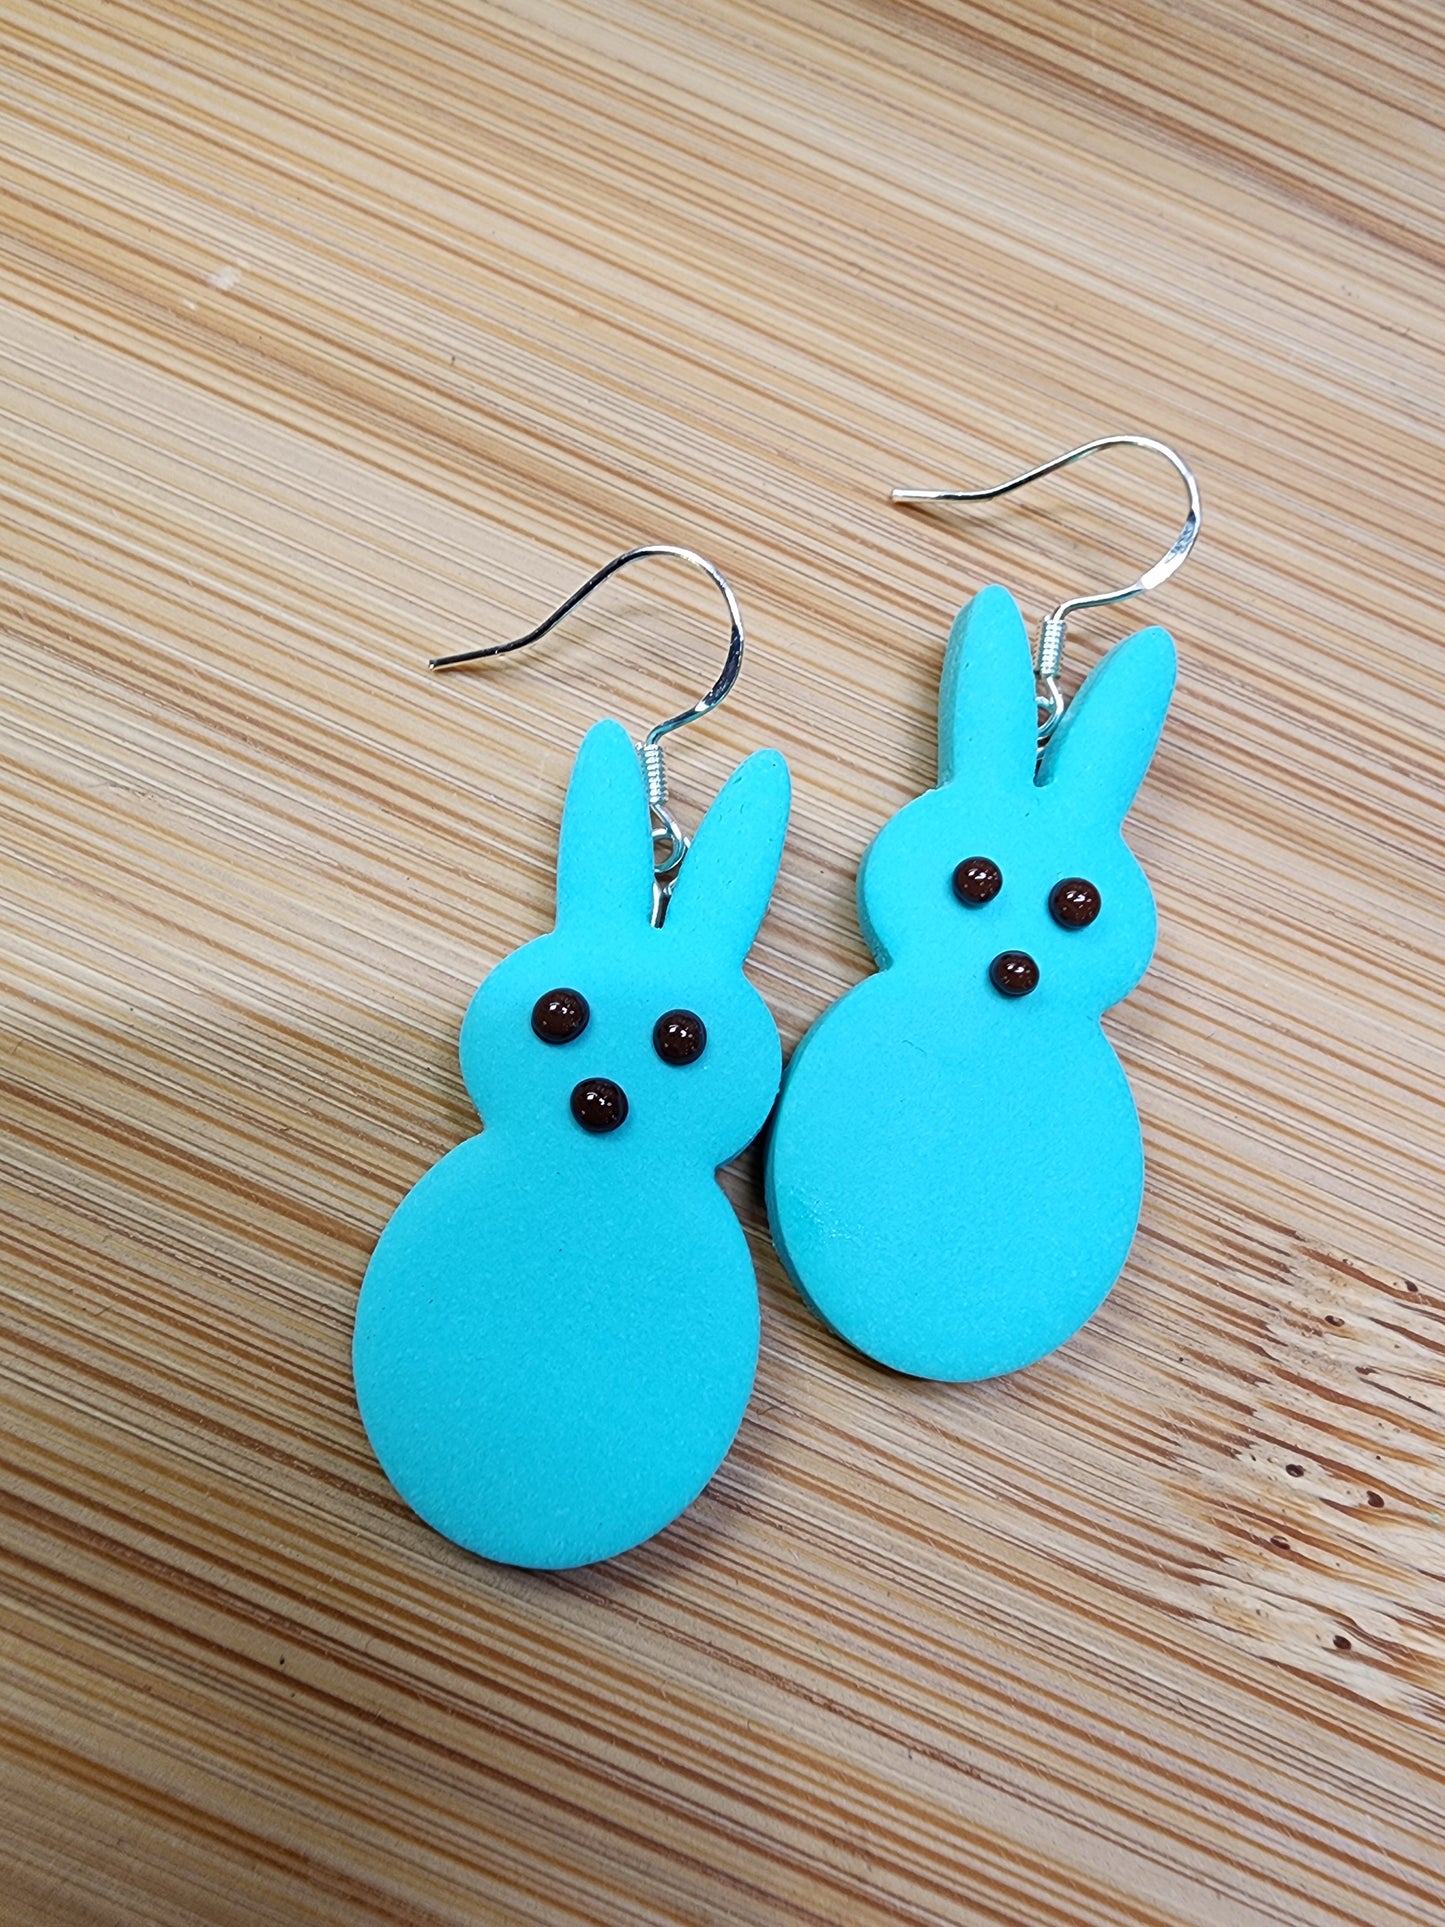 Blue Bunny Easter Earrings